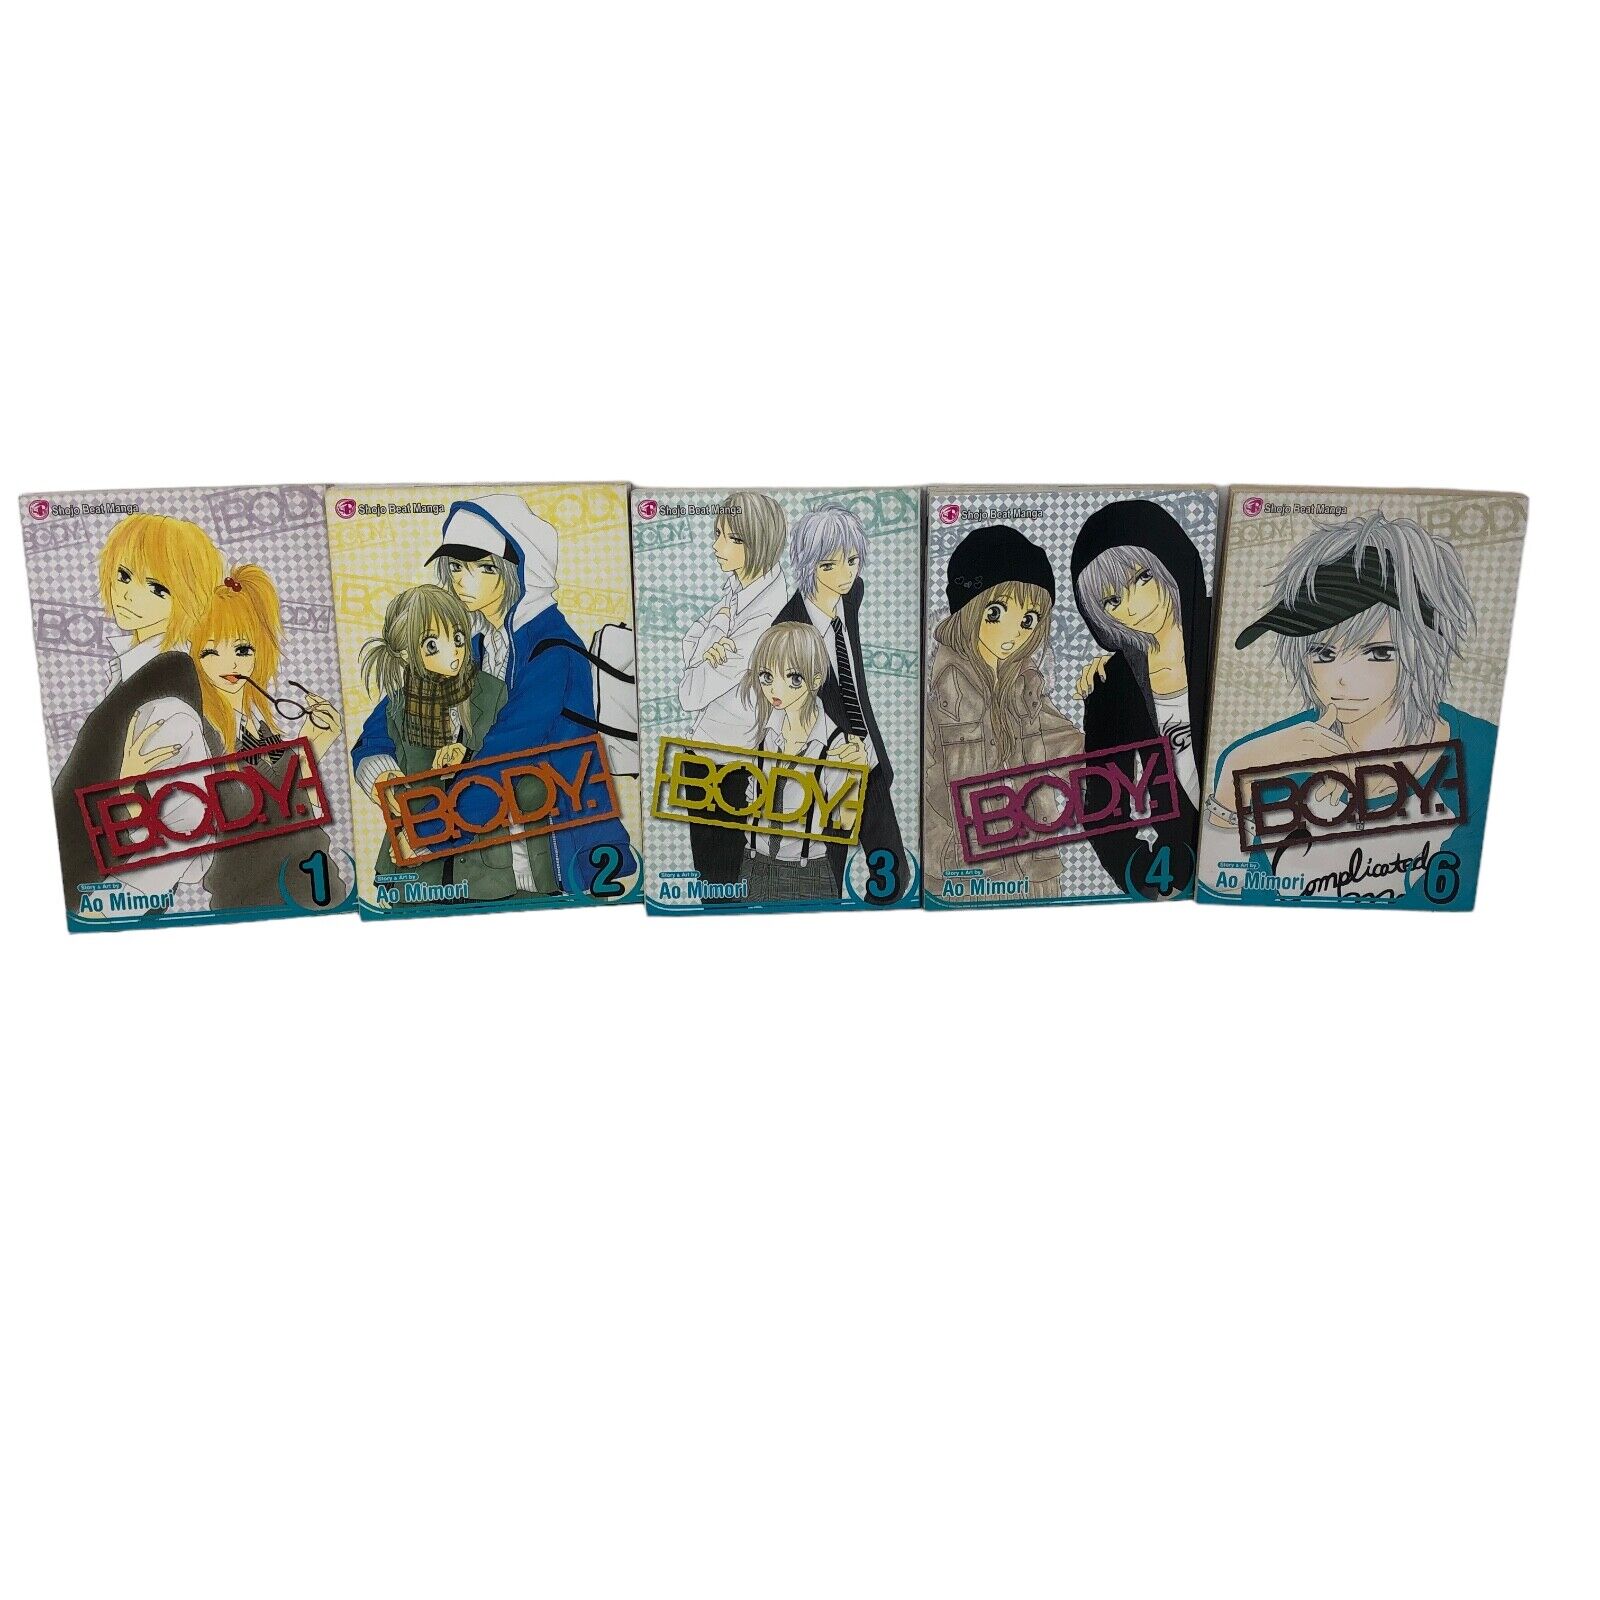 B.O.D.Y. (BODY) Volumes 1-4 Manga By Ao Mimori English